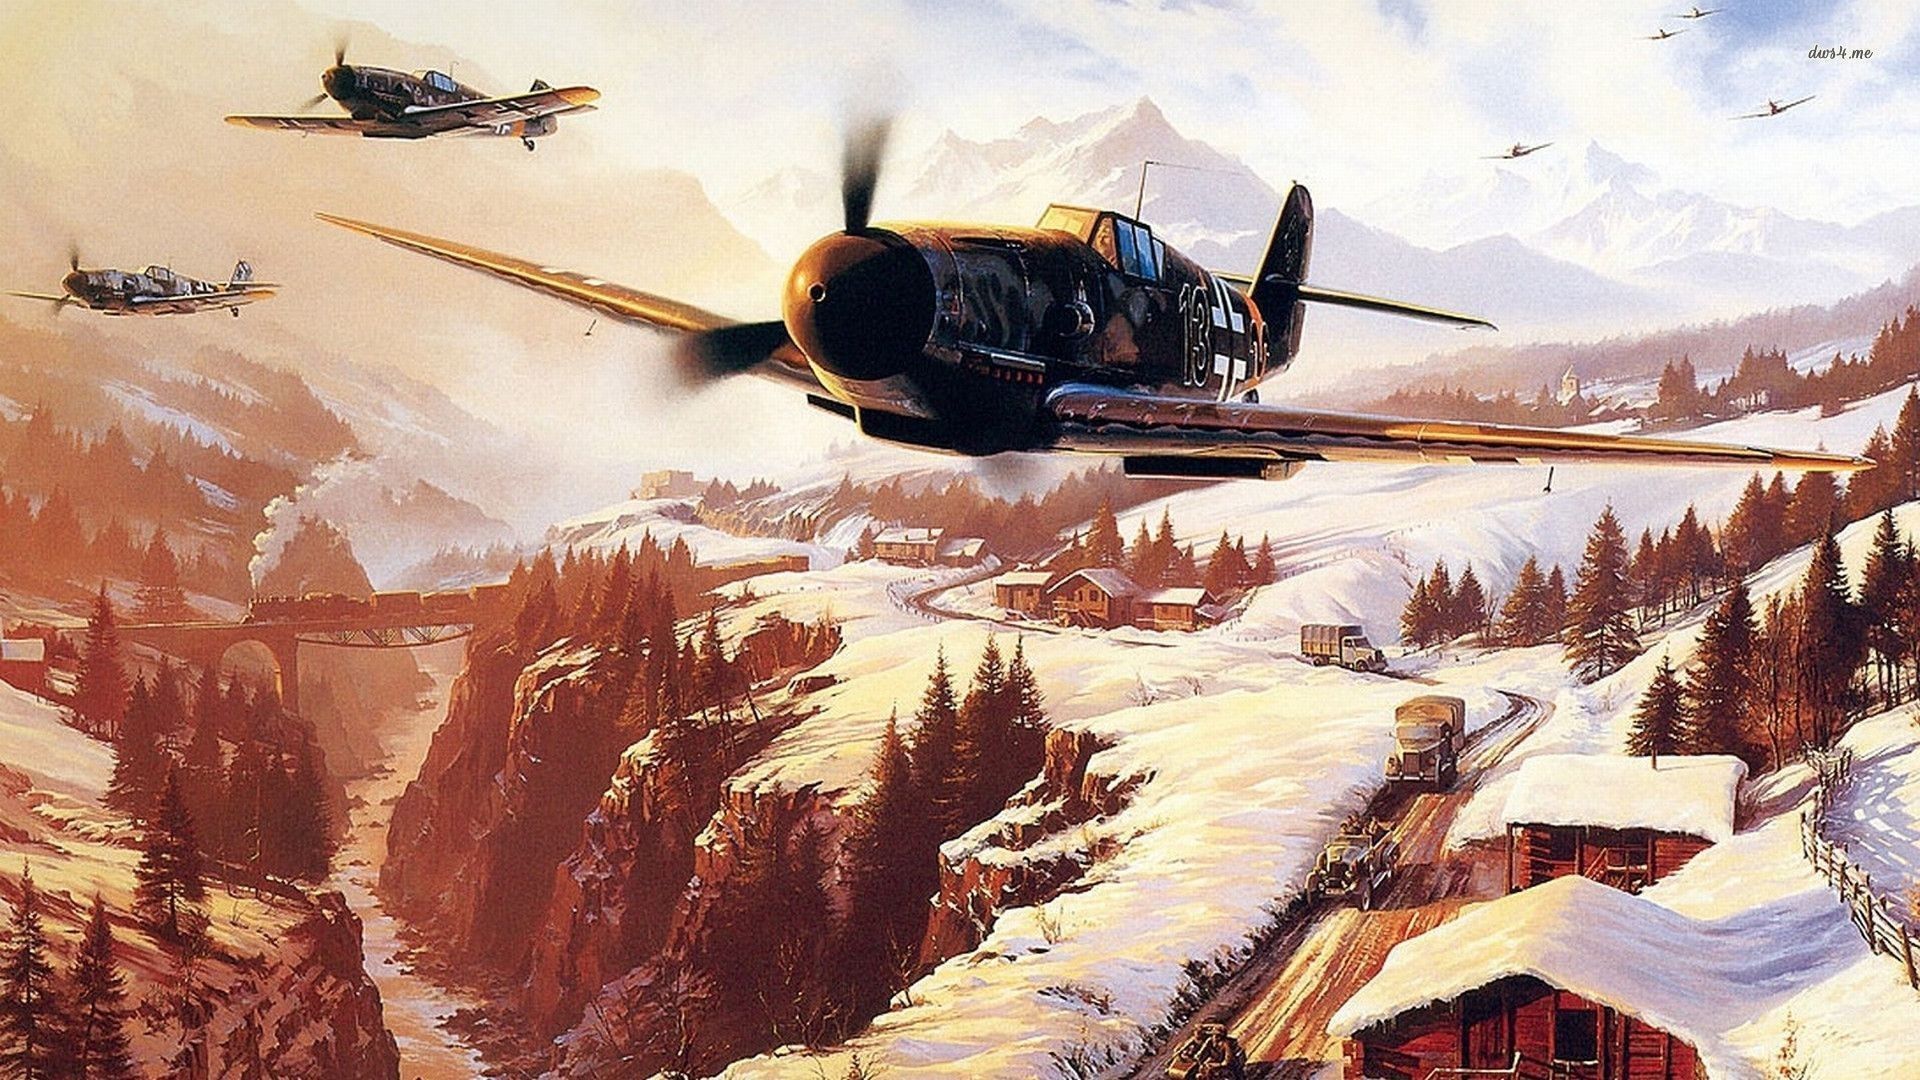 WW2 Wallpaper Image